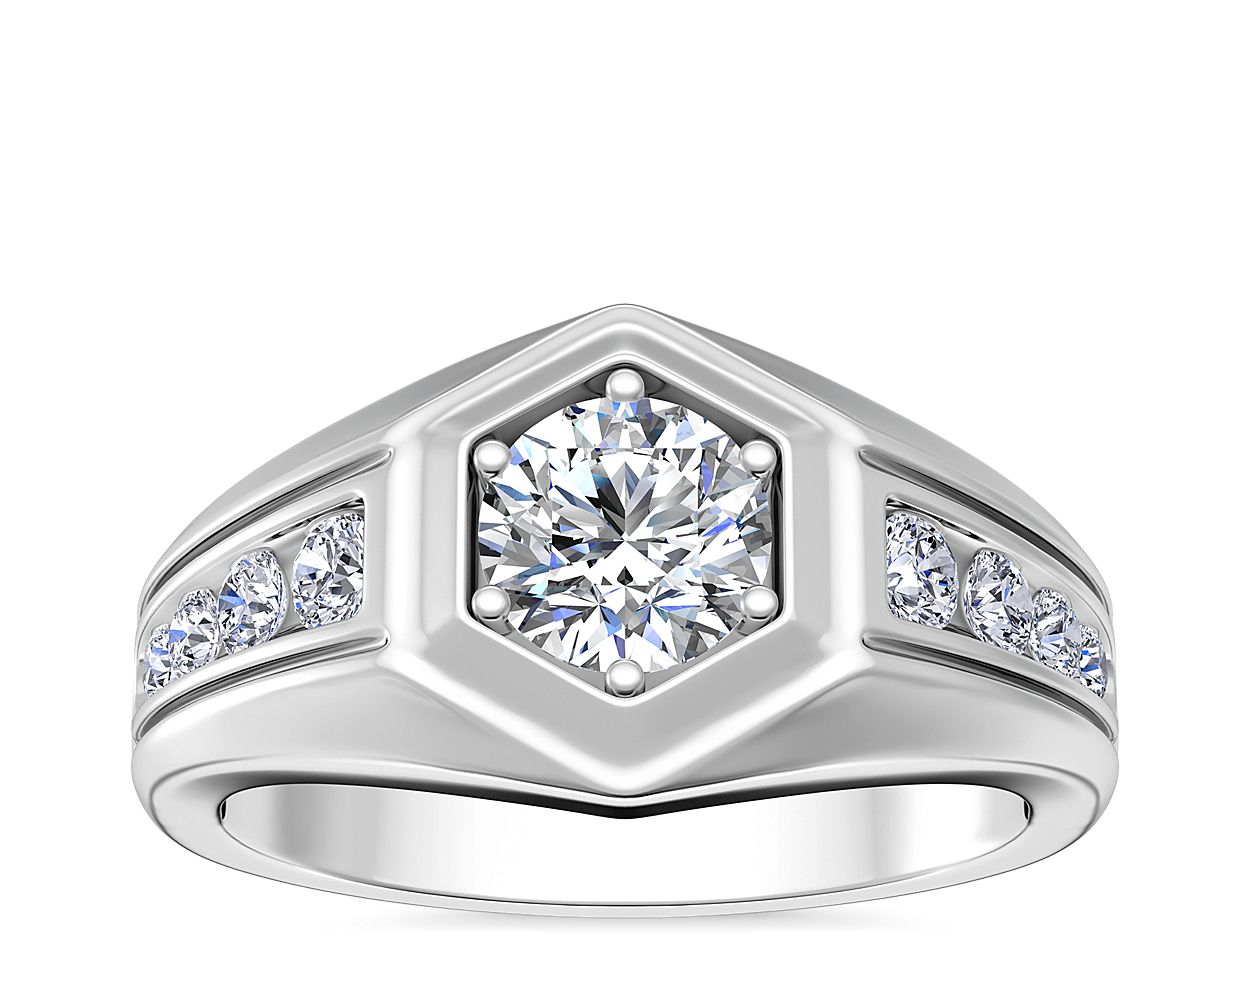 Mens Diamond Ring Designs - JD SOLITAIRE